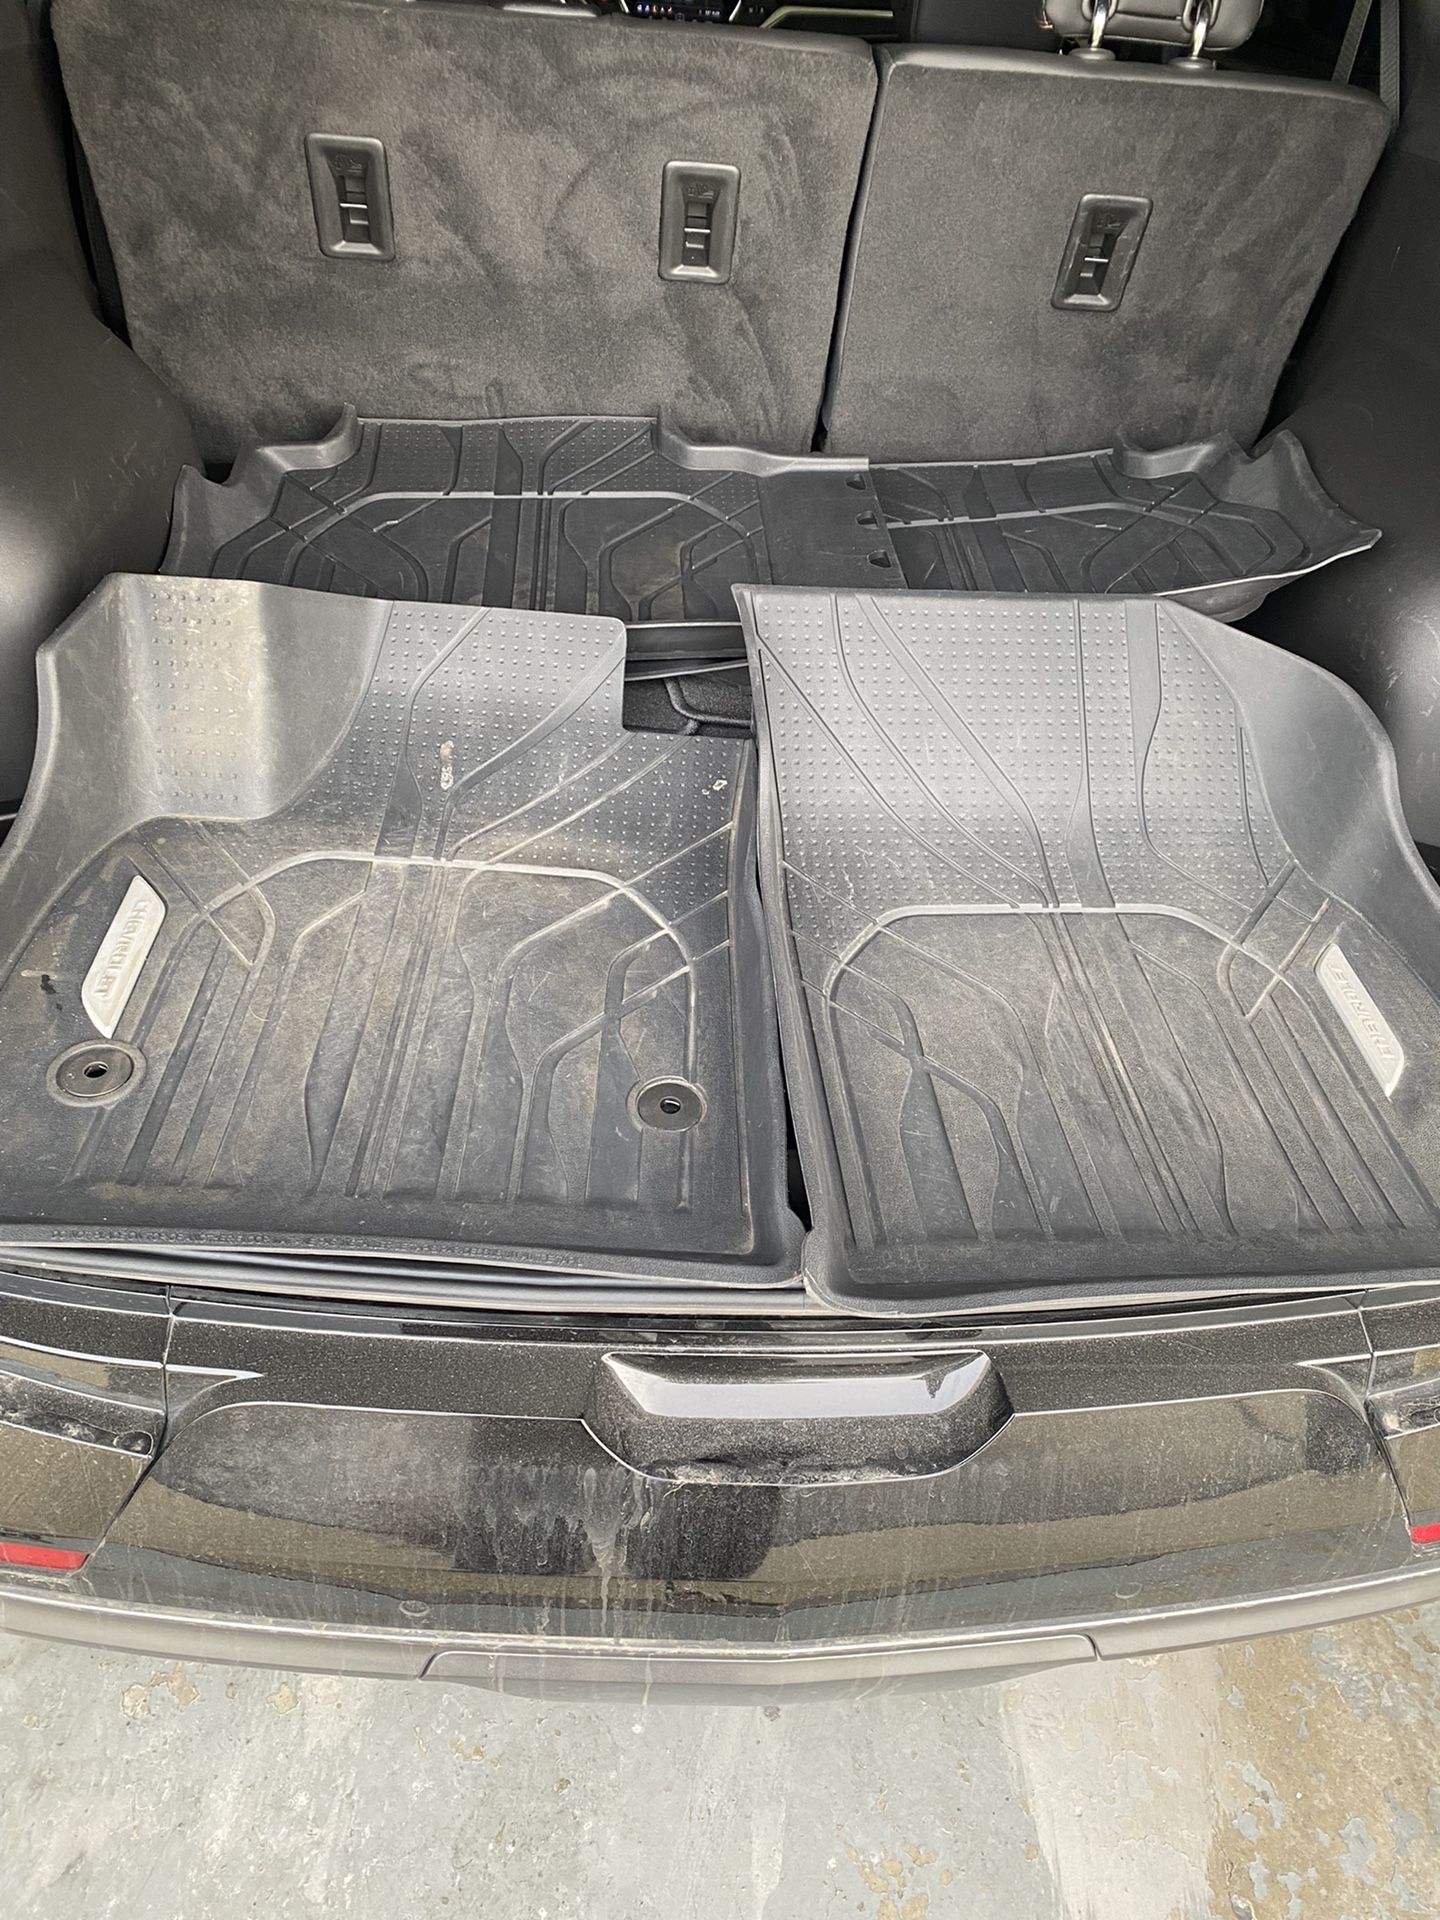 2019 Chevy blazer rubber floor mats